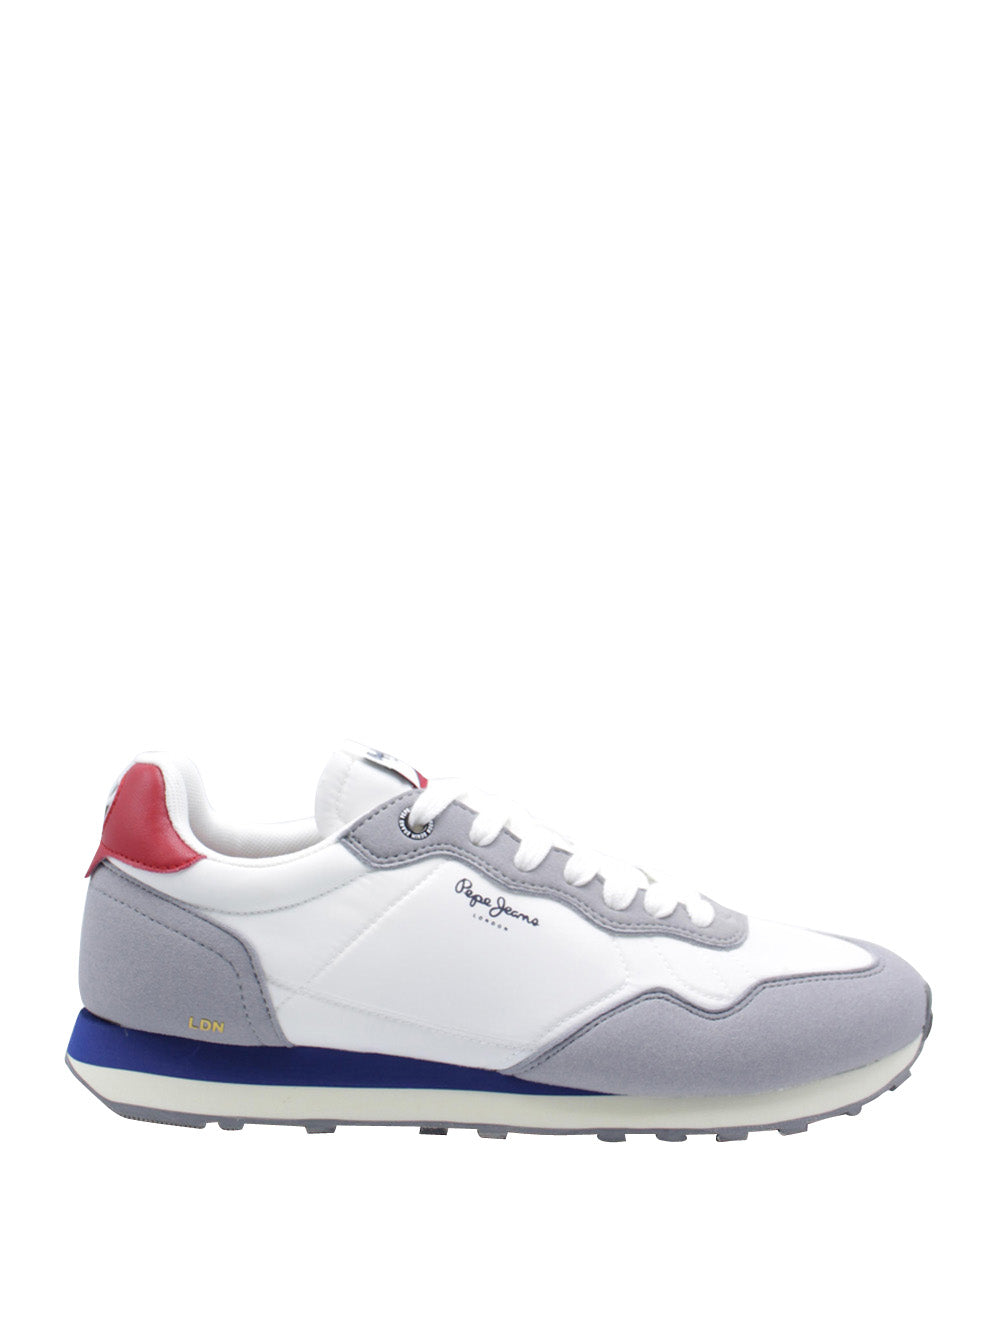 PEPE JEANS Sneakers Uomo - Bianco modello PMS40010